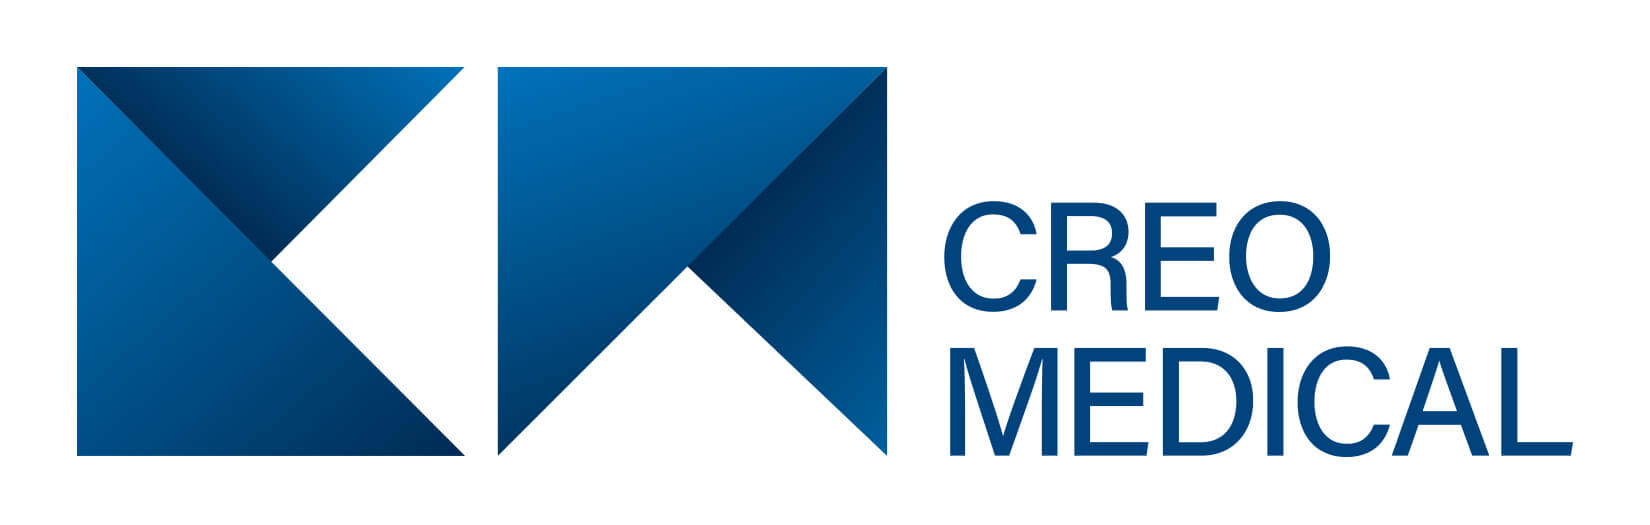 Creo Medical Ltd logo